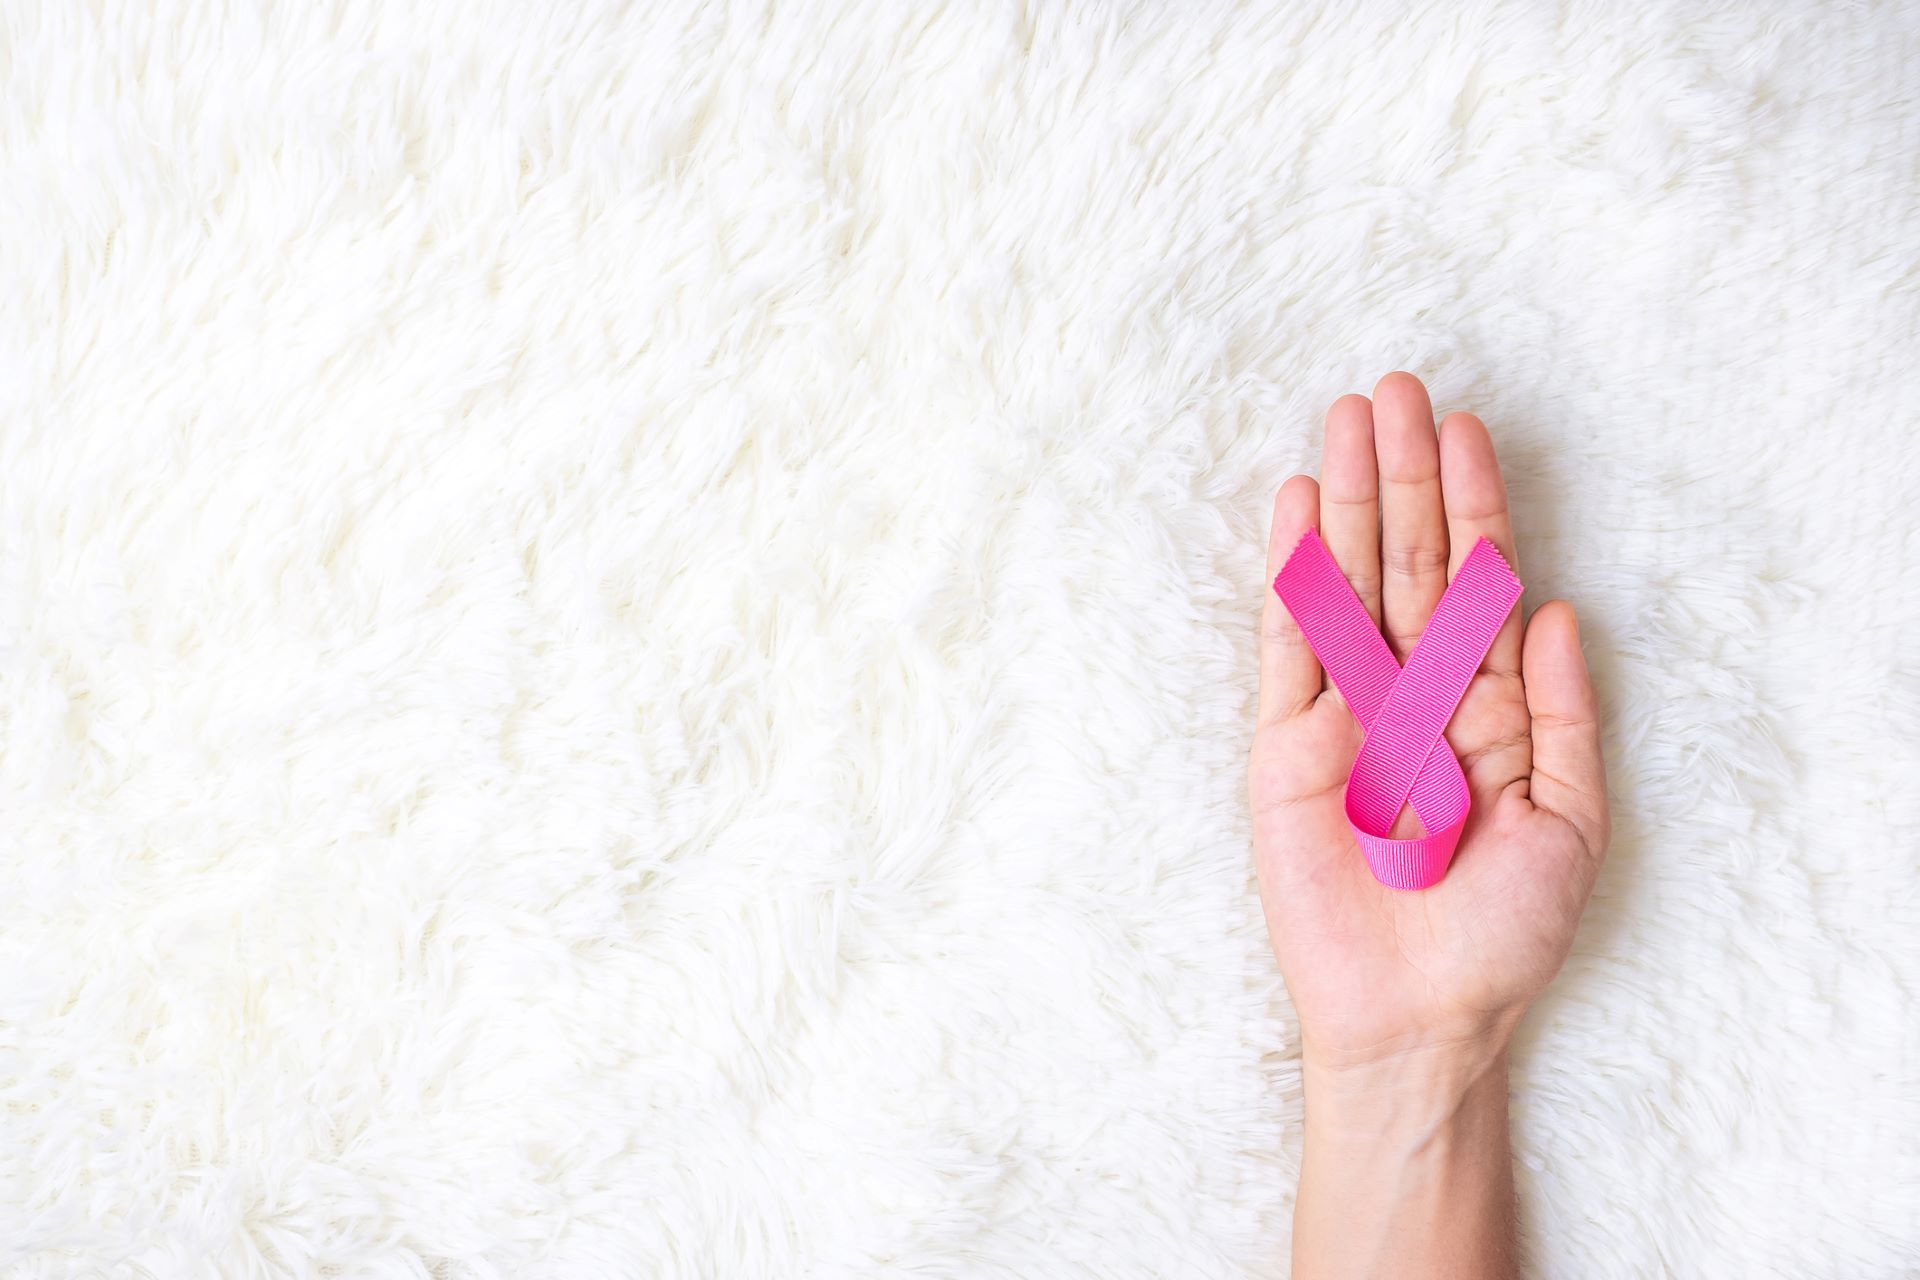 Test de saliva detecta cáncer de mama en cinco segundos